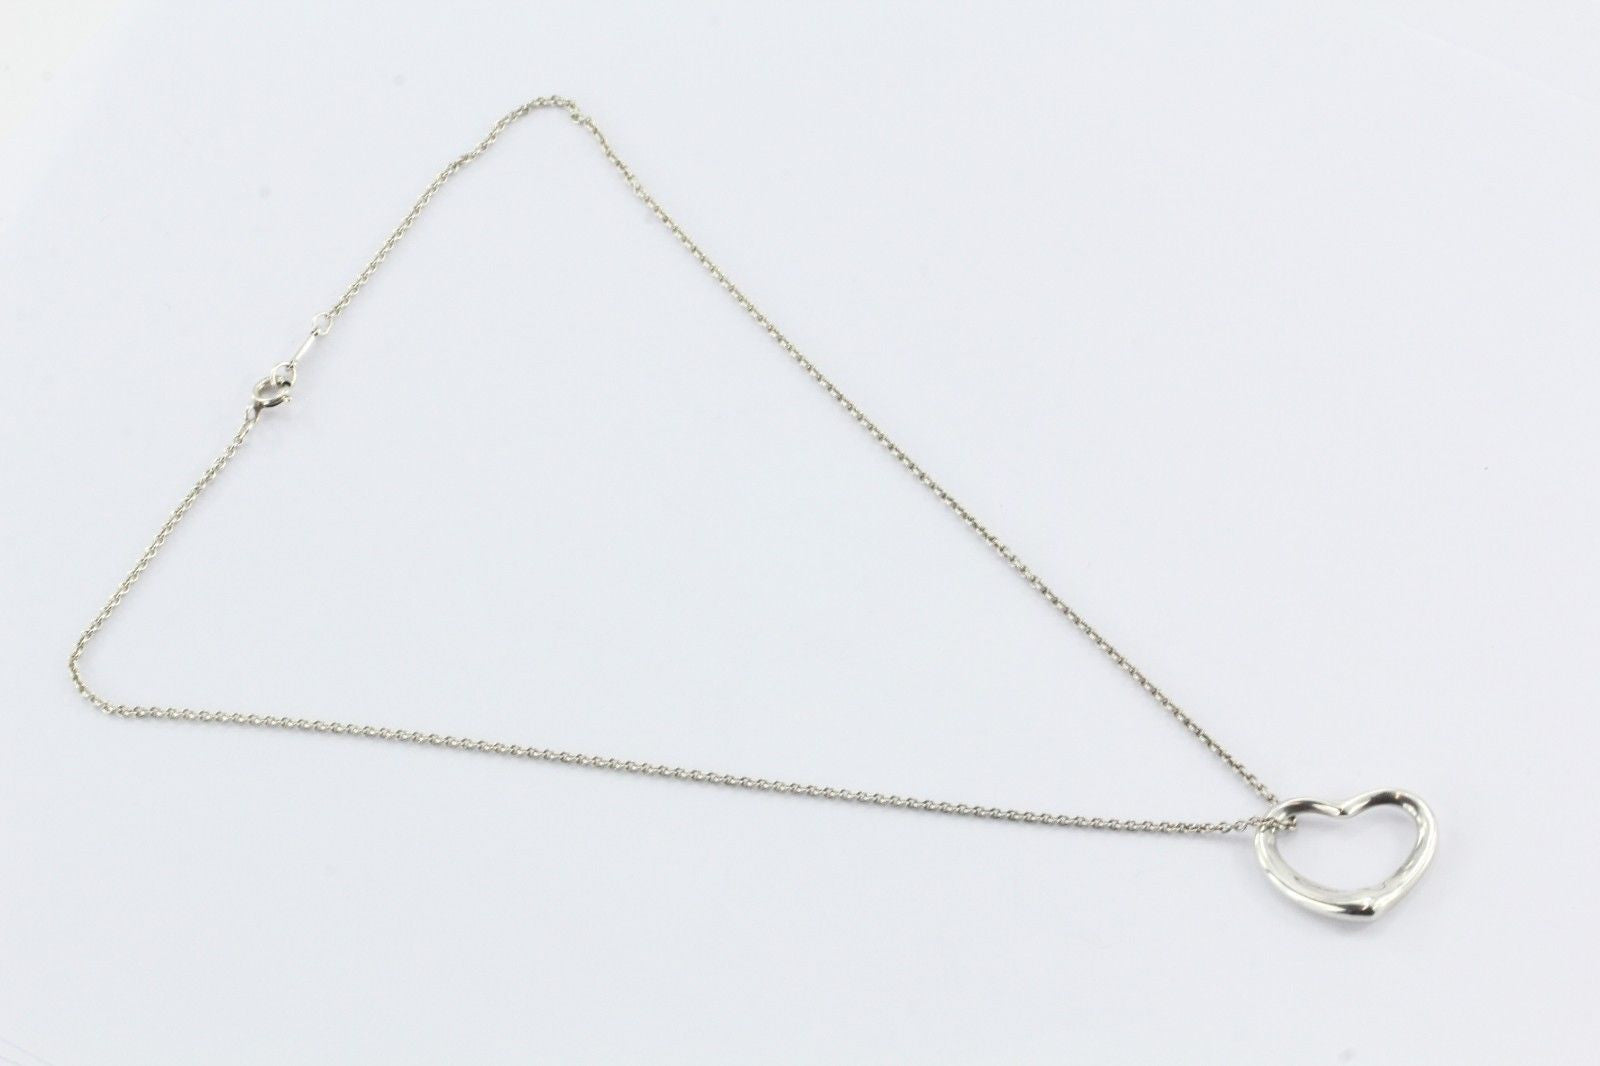 Authentic Tiffany & Co. Open Heart Necklace #260-006-675-3131 | eBay